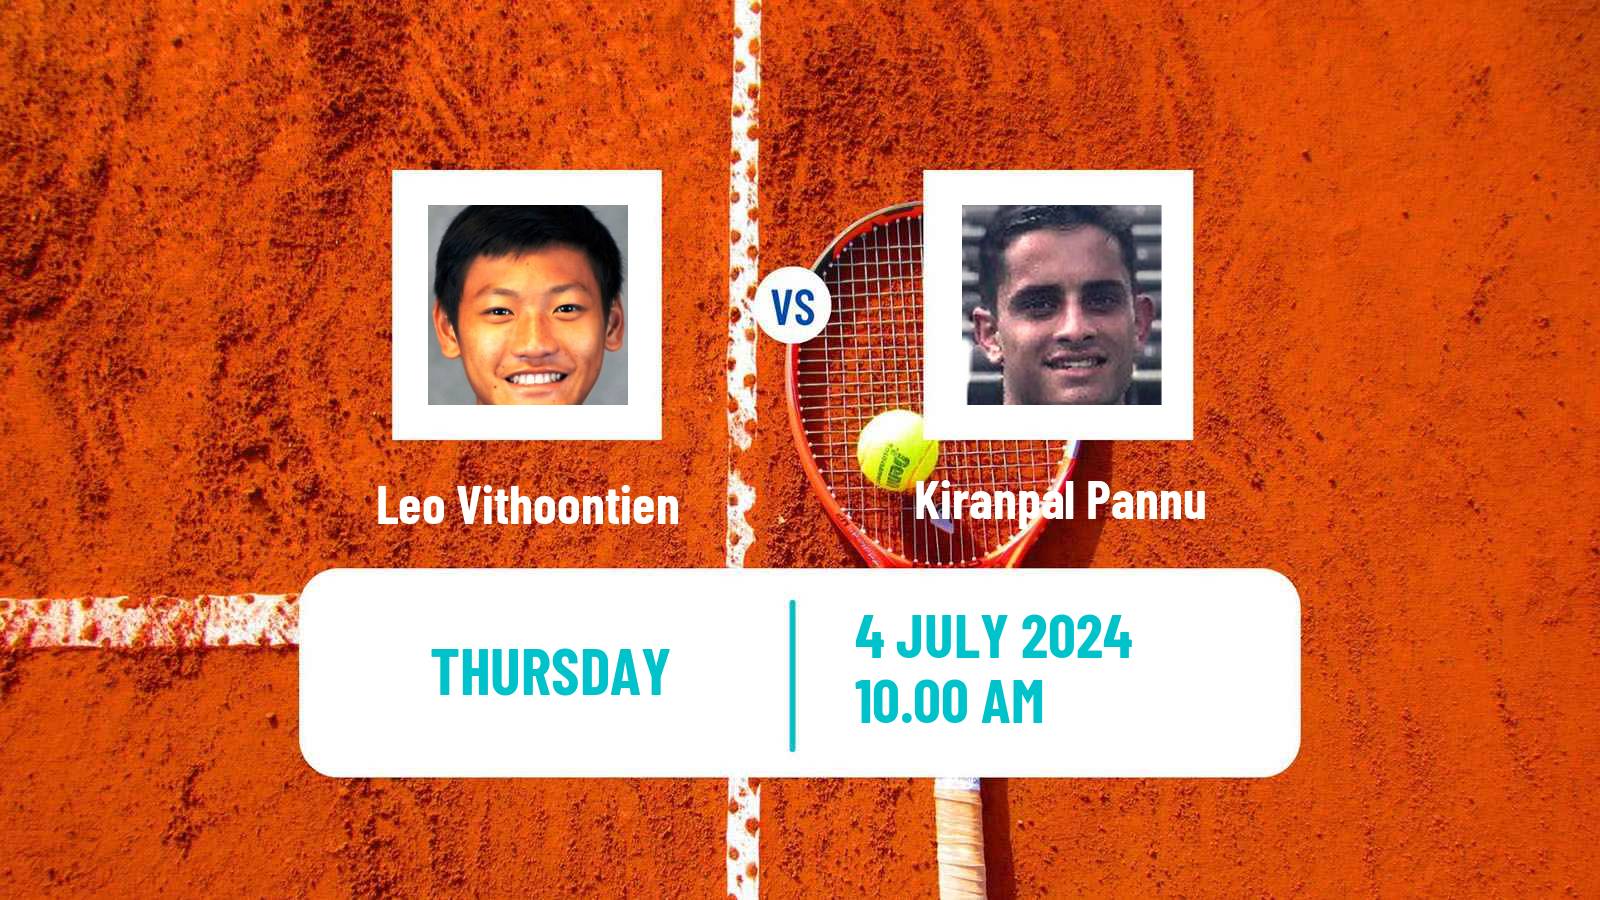 Tennis ITF M25 Laval Men Leo Vithoontien - Kiranpal Pannu